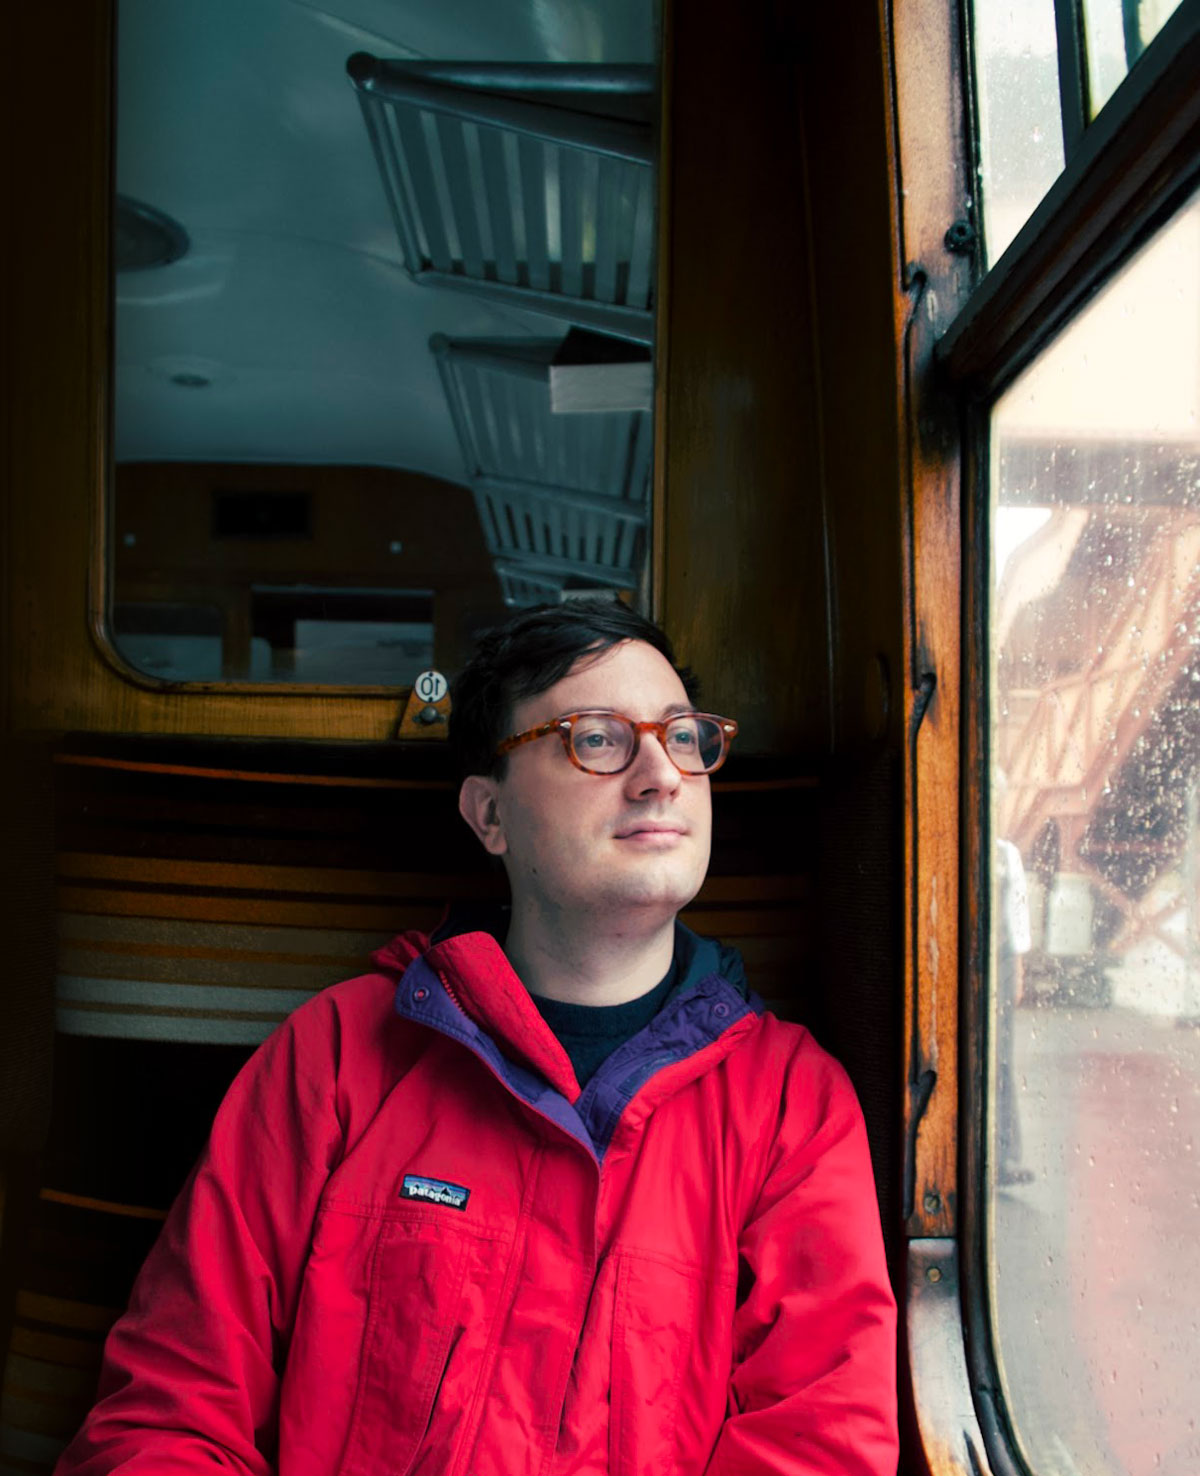 A photo of Matt on a train